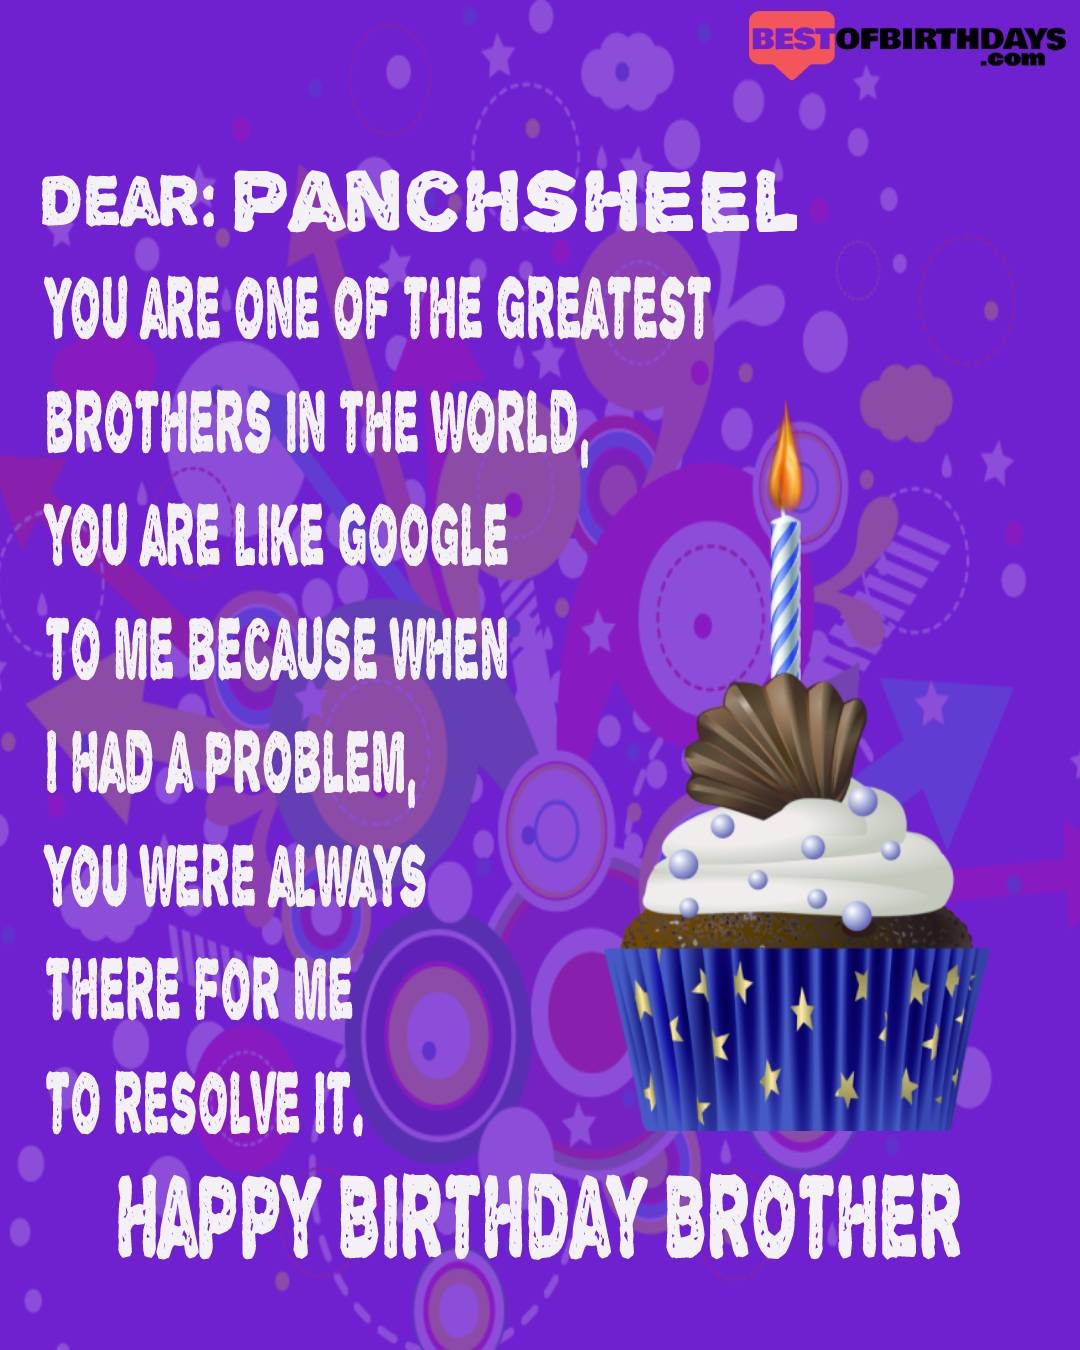 Happy birthday panchsheel bhai brother bro